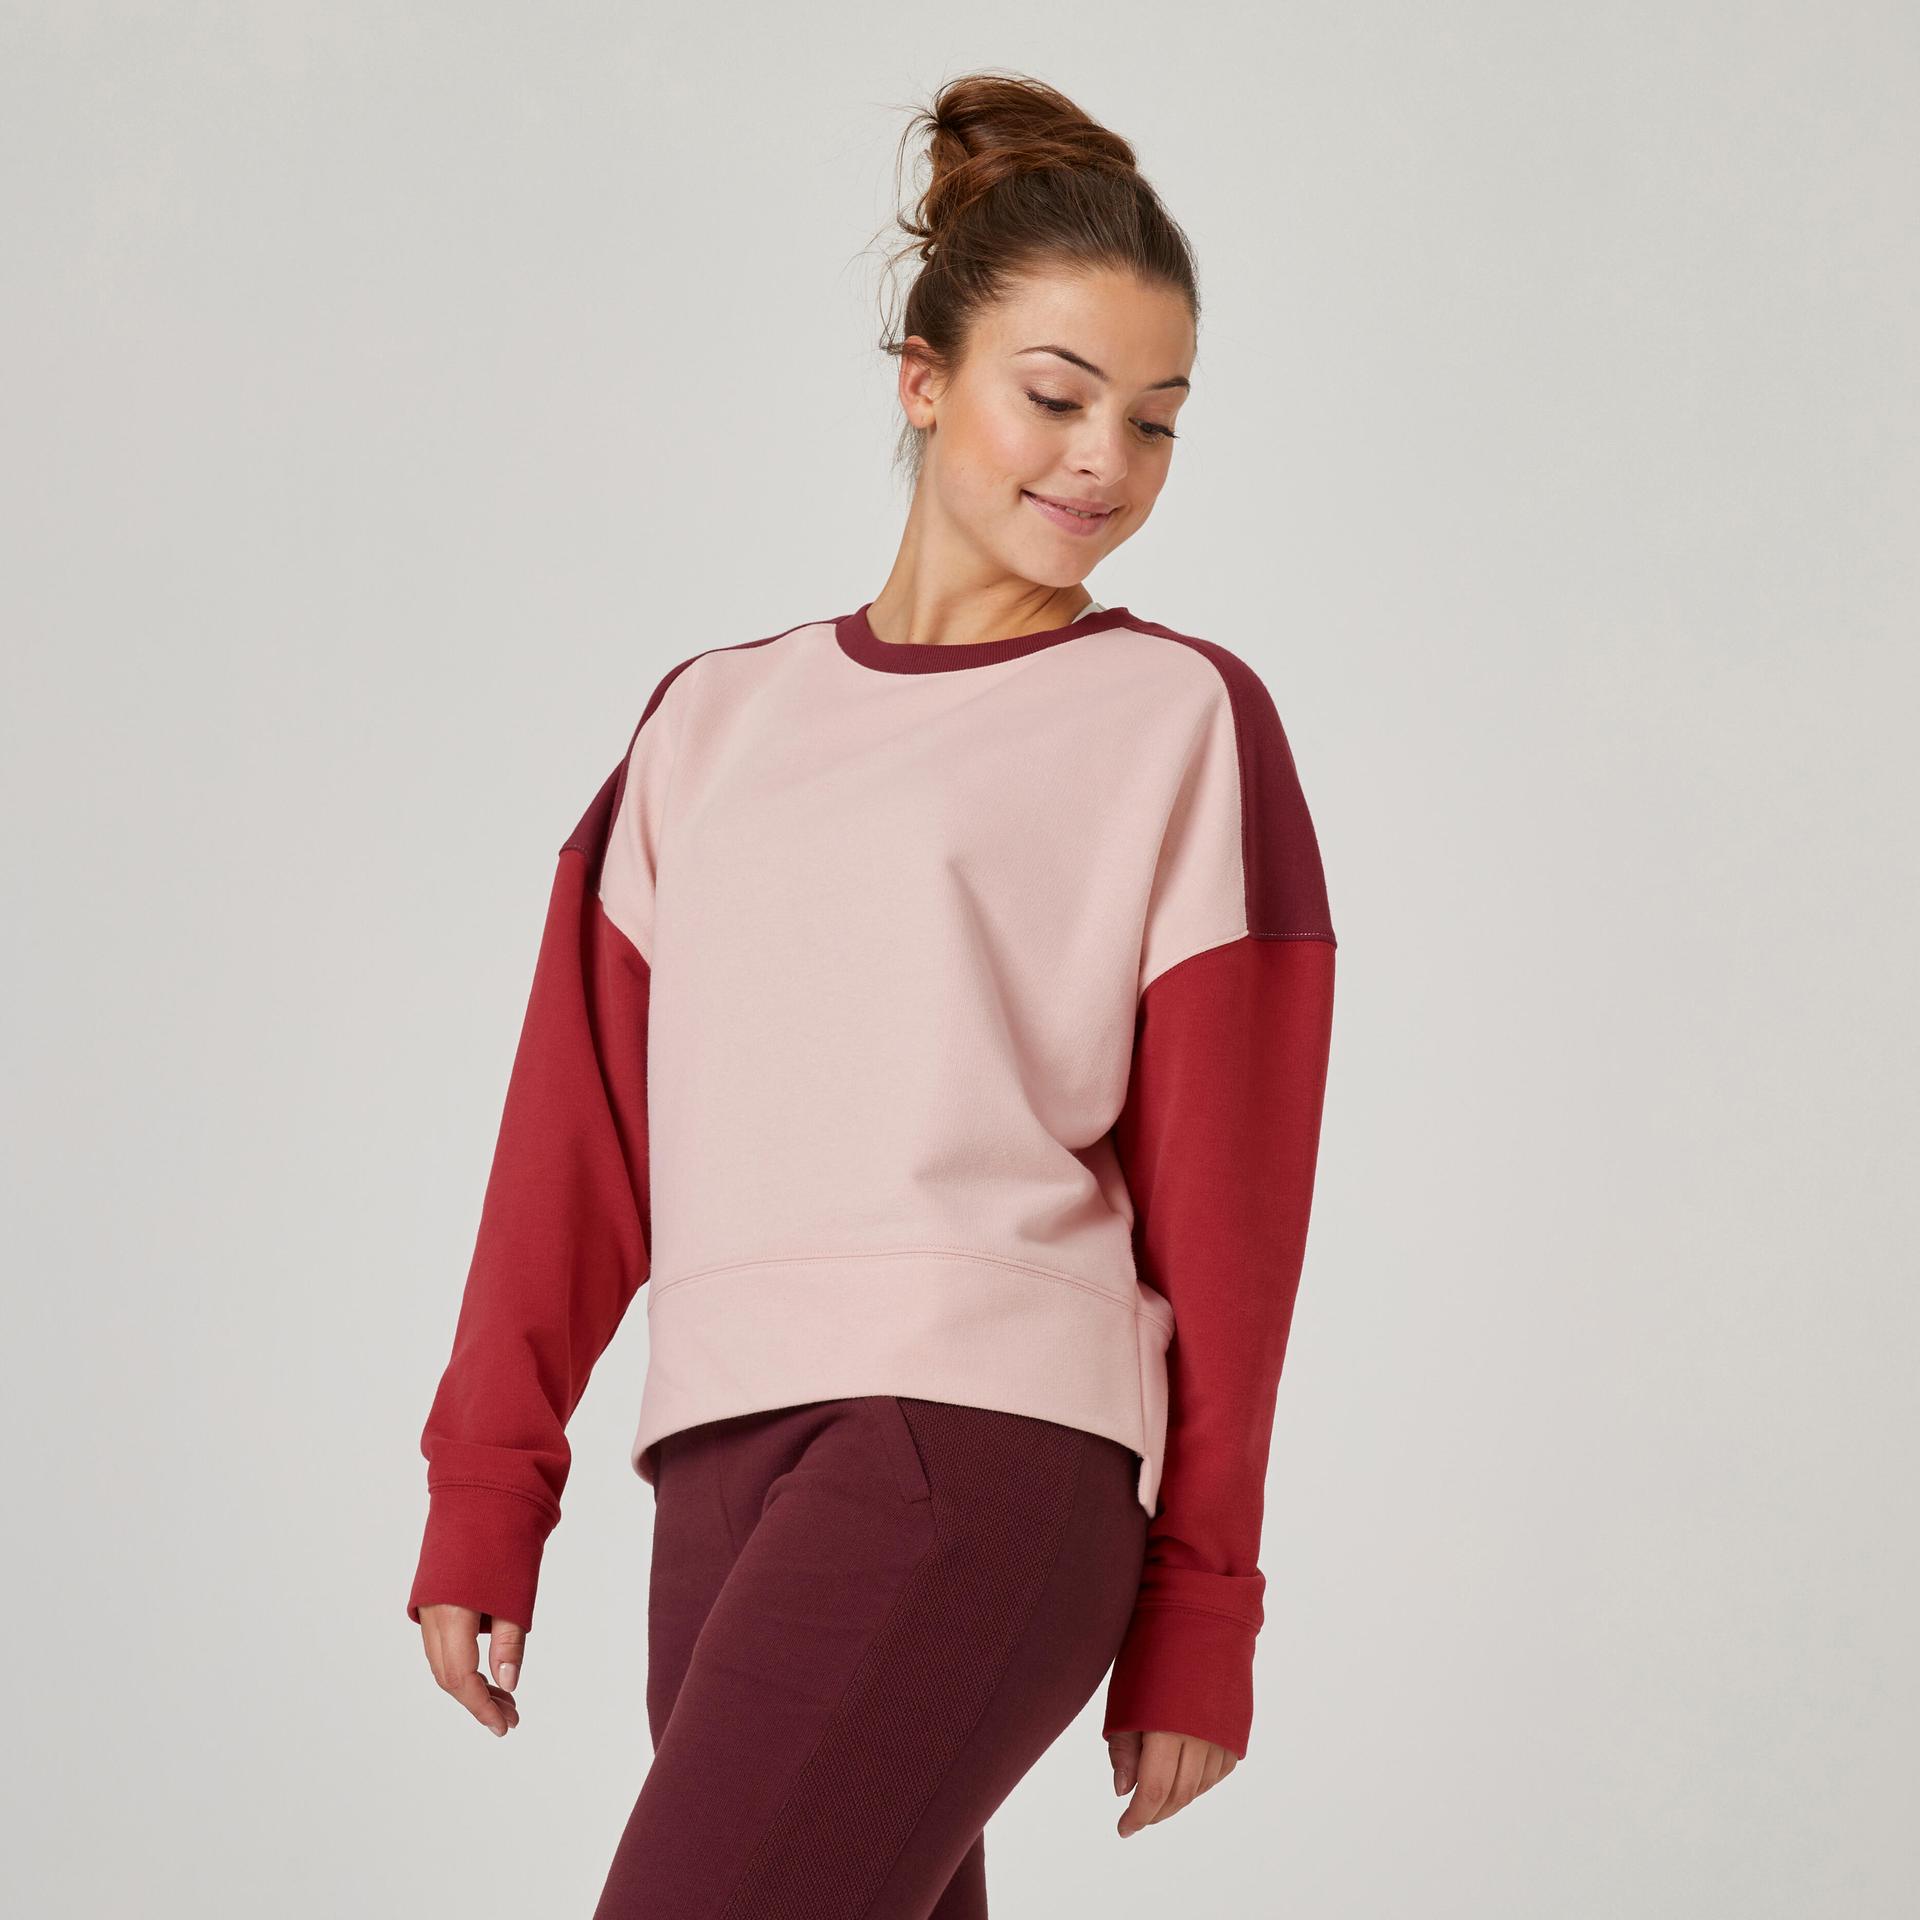 women's loose fitness sweatshirt 120 cosmeto - pink/burgundy